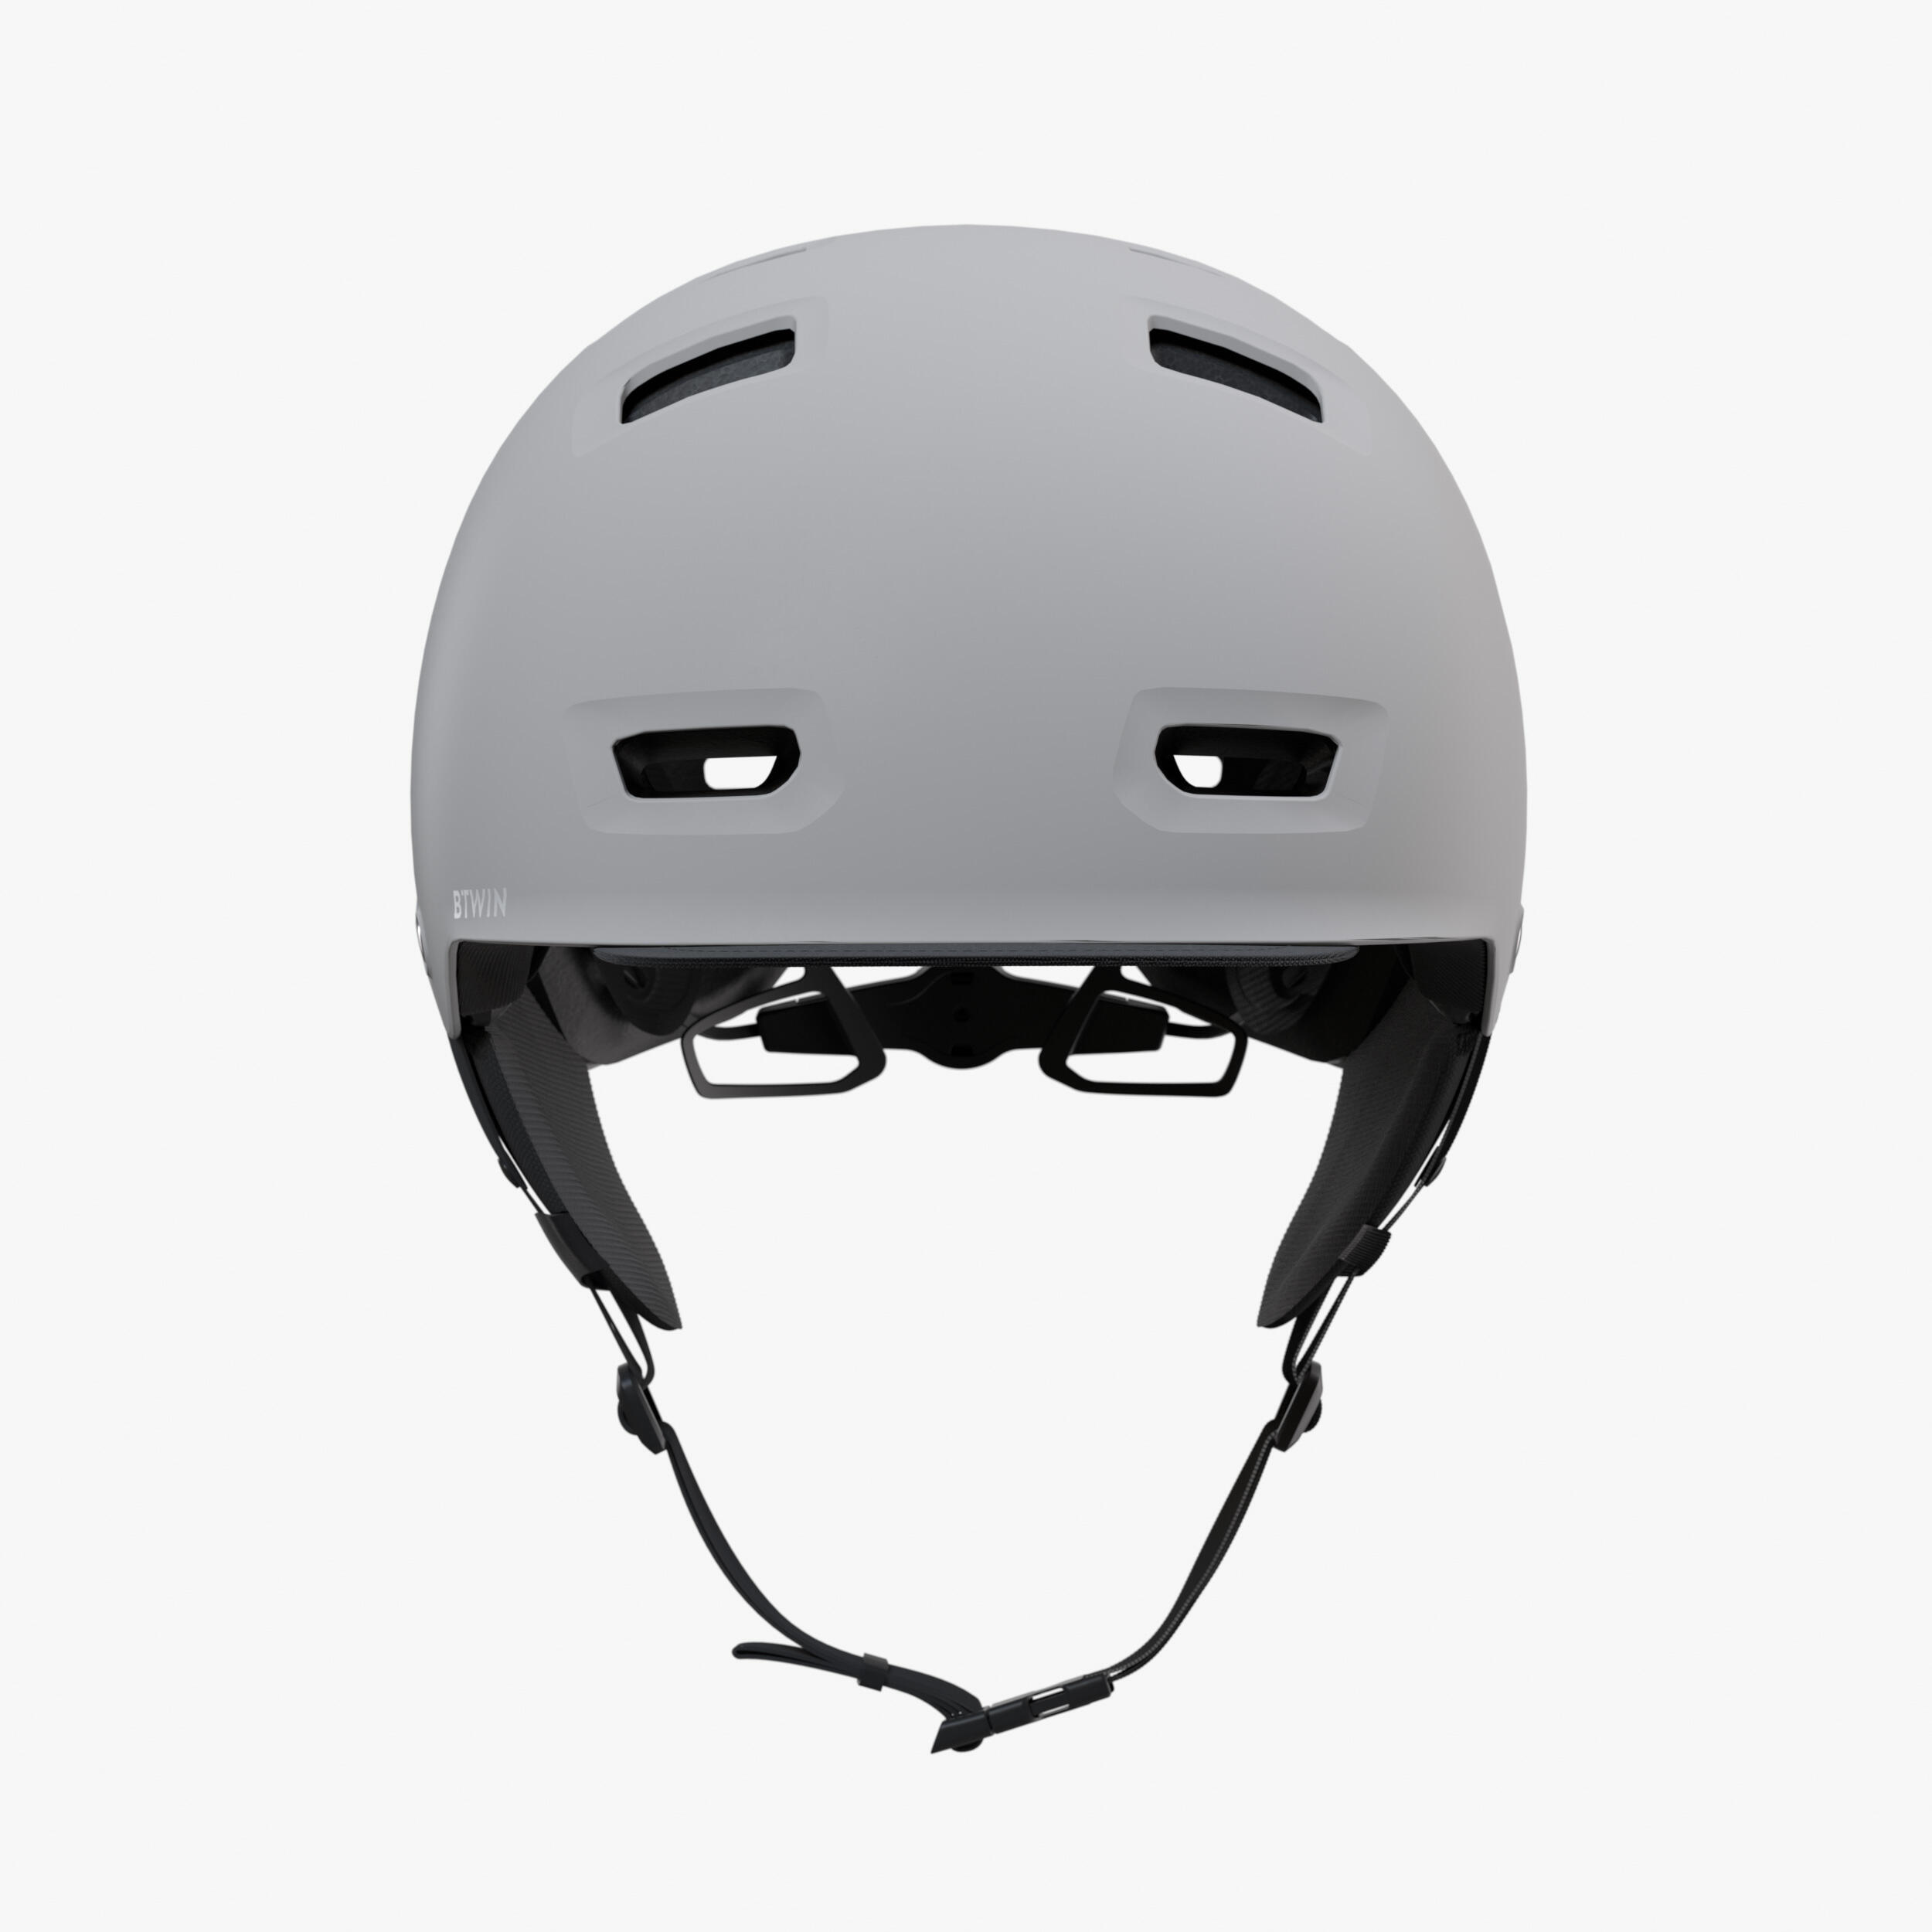 City Cycling Bowl Helmet - Grey 8/9